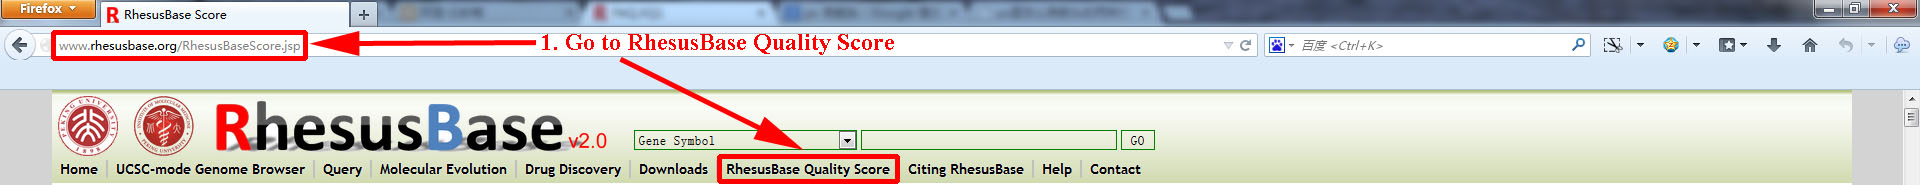 entry to RhesusBase Score paeg